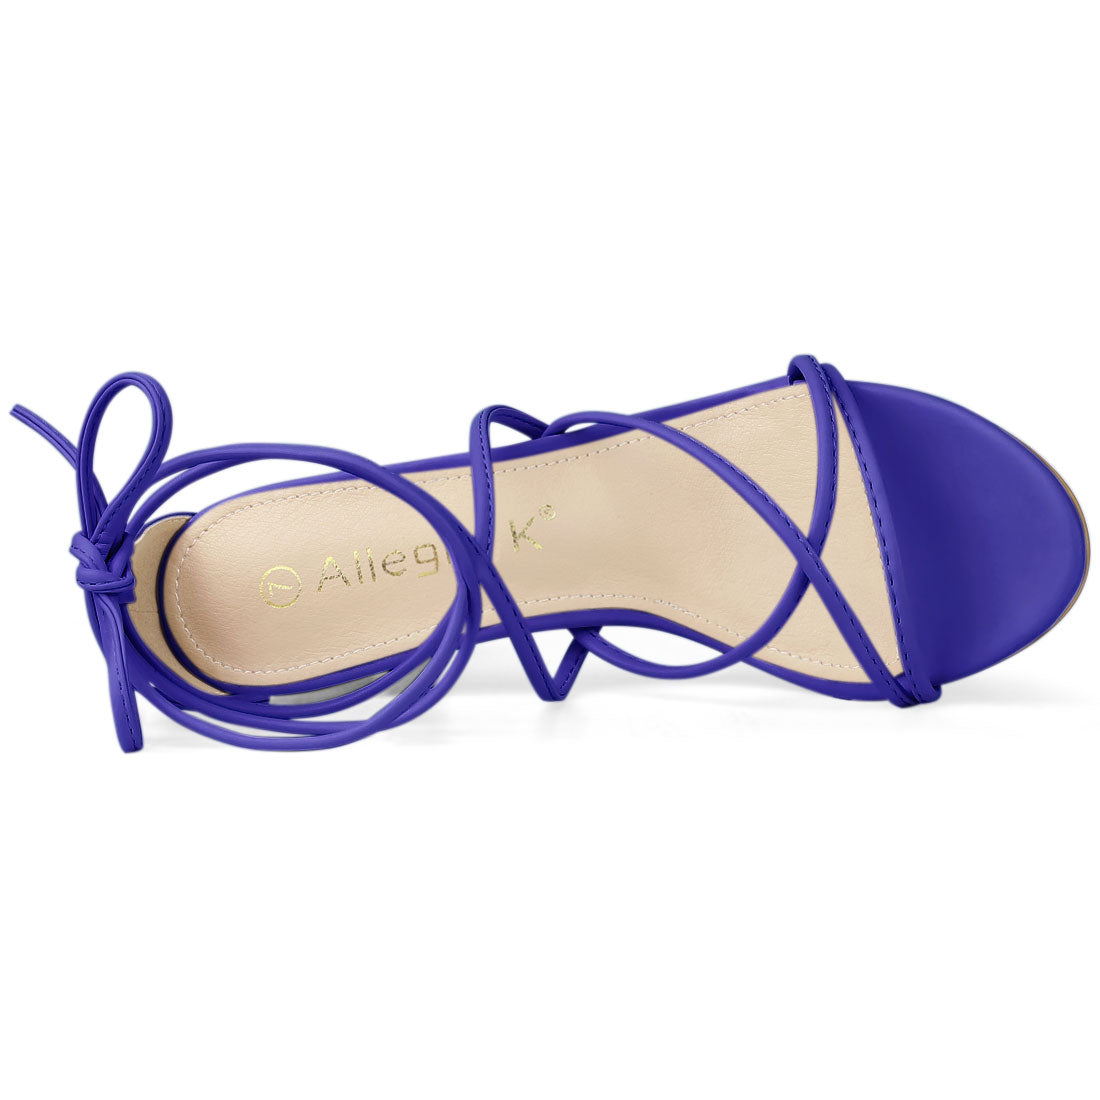 Allegra K Strappy Straps Lace Up Chunky Gold Heel Sandals Dark Blue